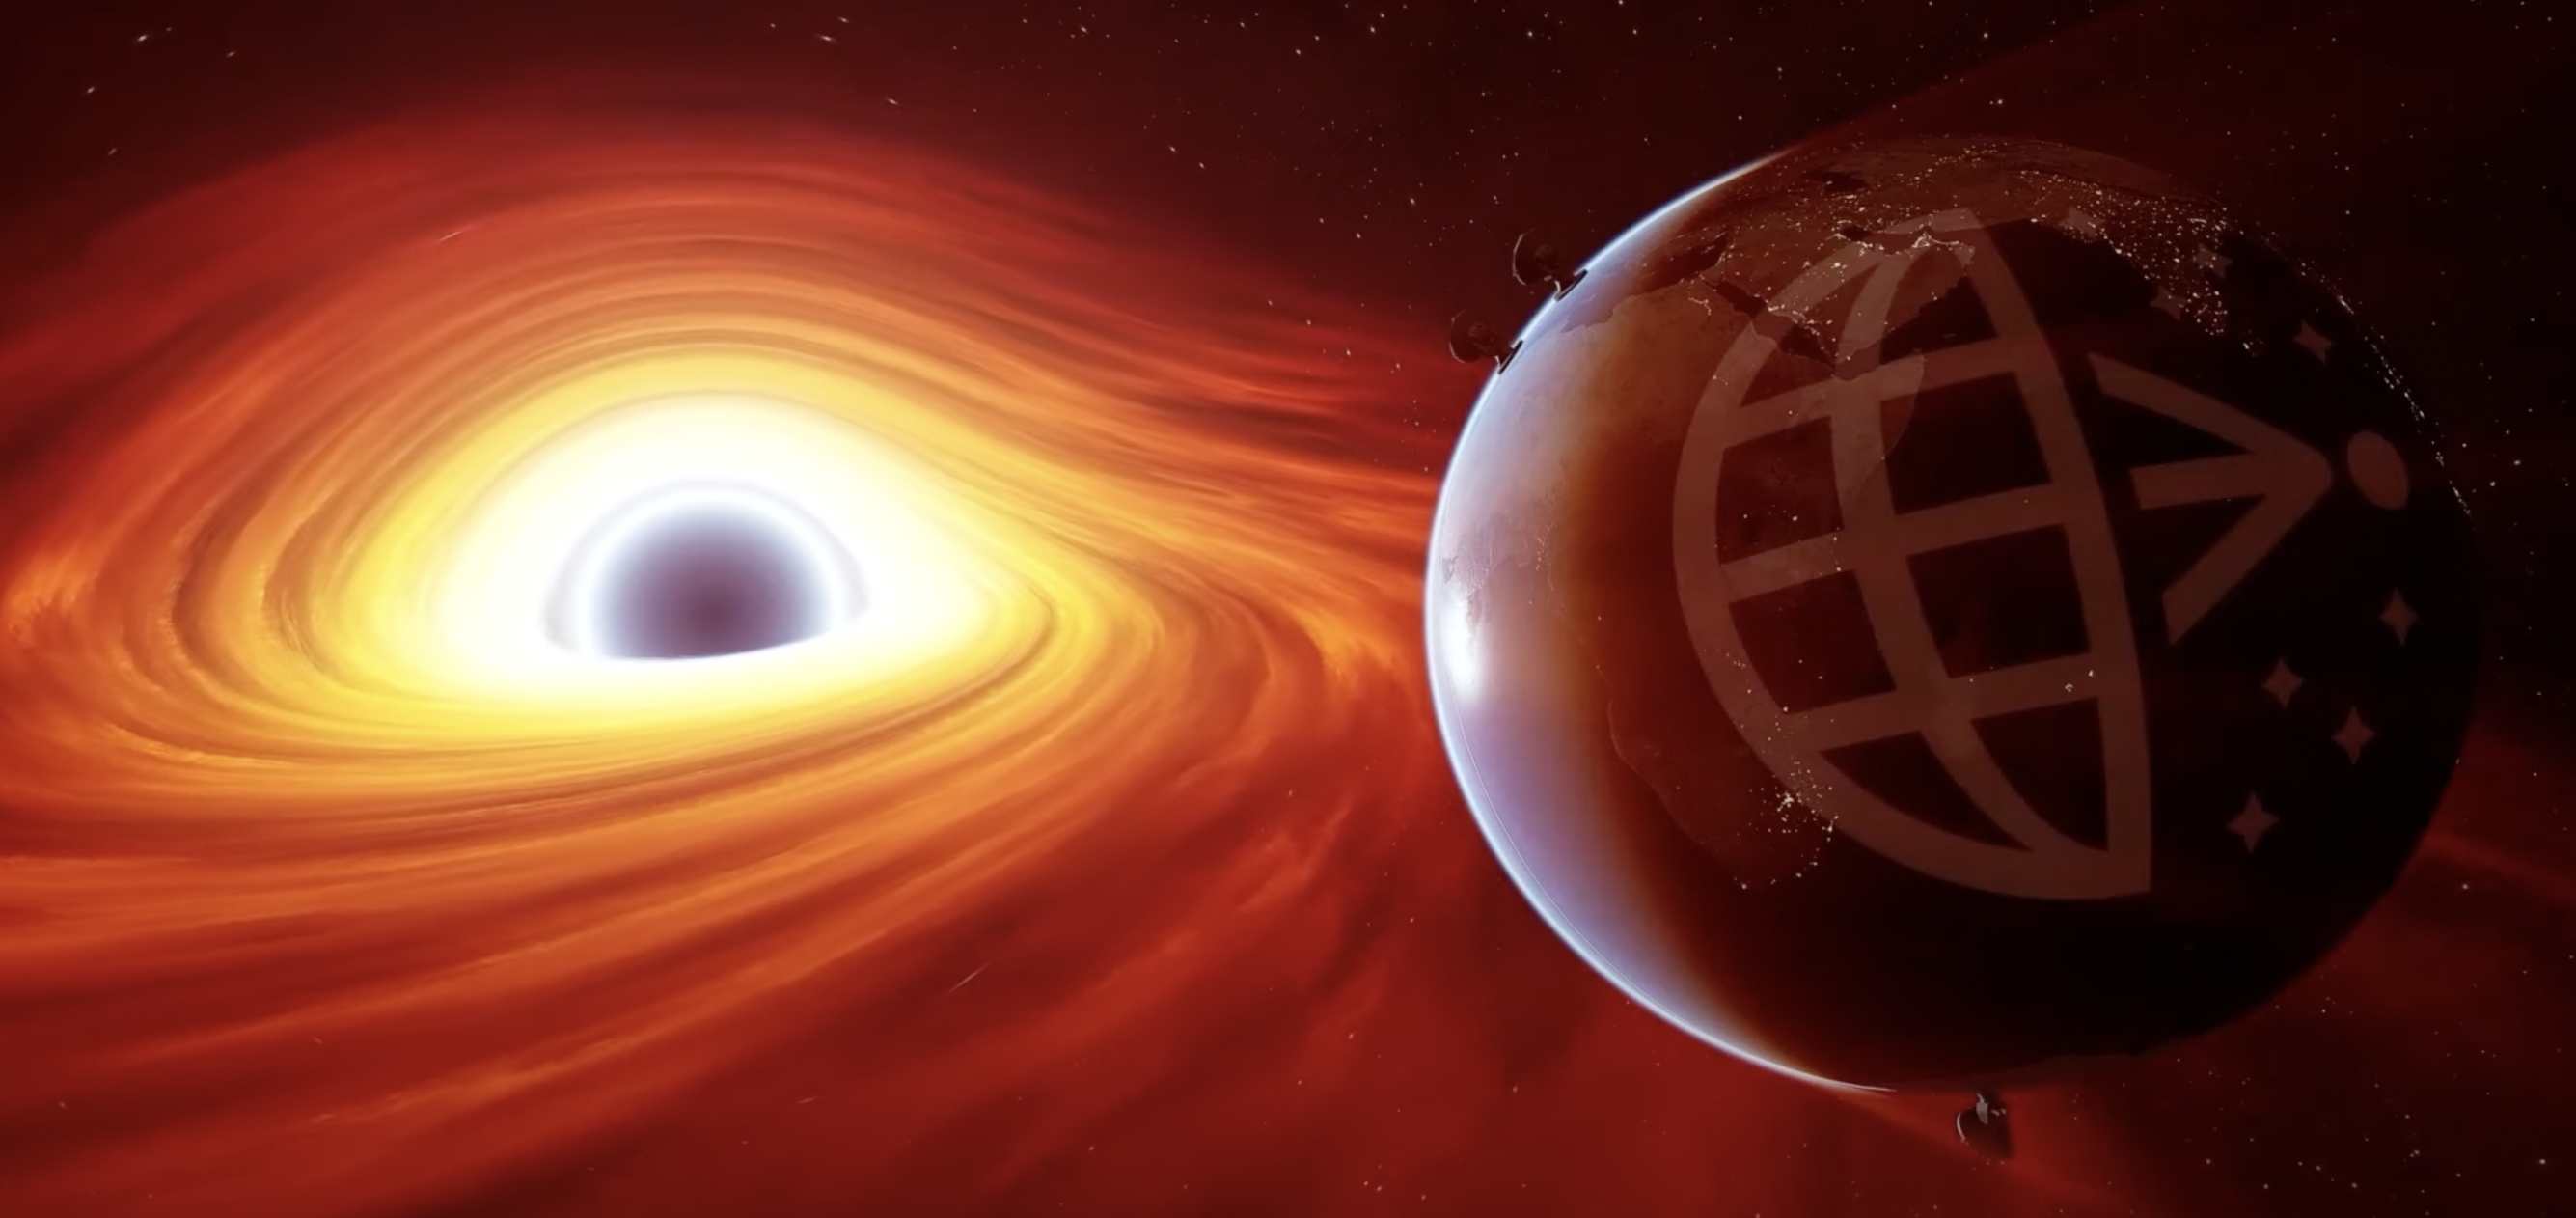 Event Horizon Telescope and Milky Way Galaxy black hole (Art: National Science Foundation)